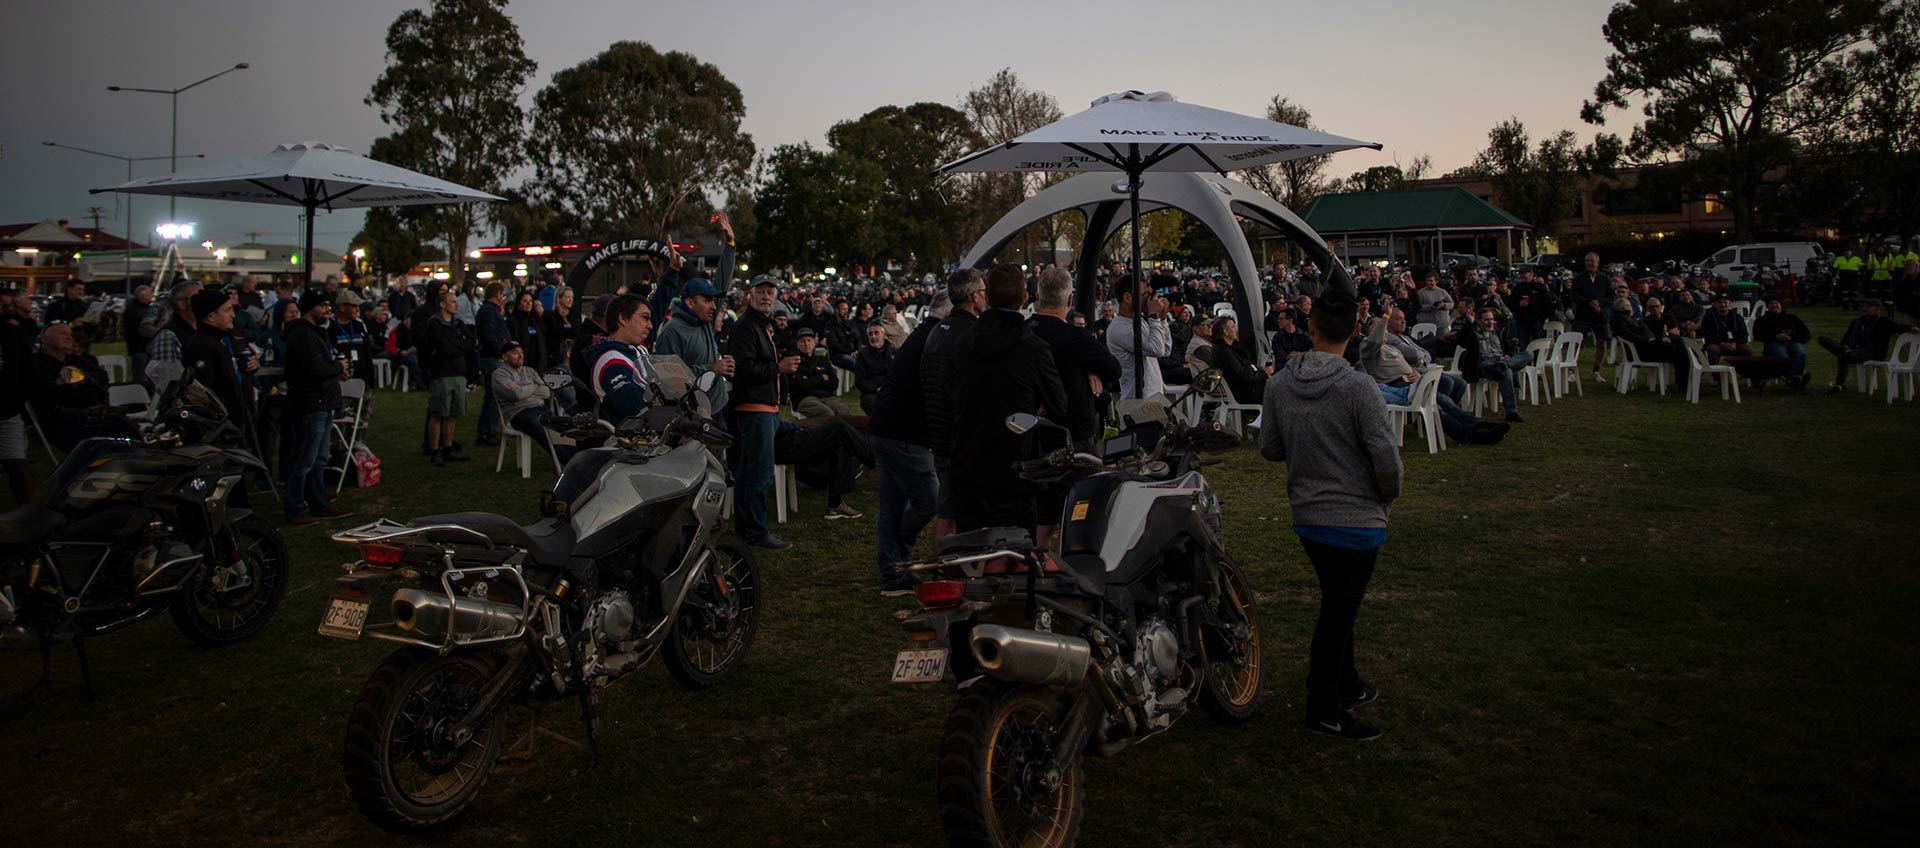 BMW Motorrad Oktoberfest National Demo Day